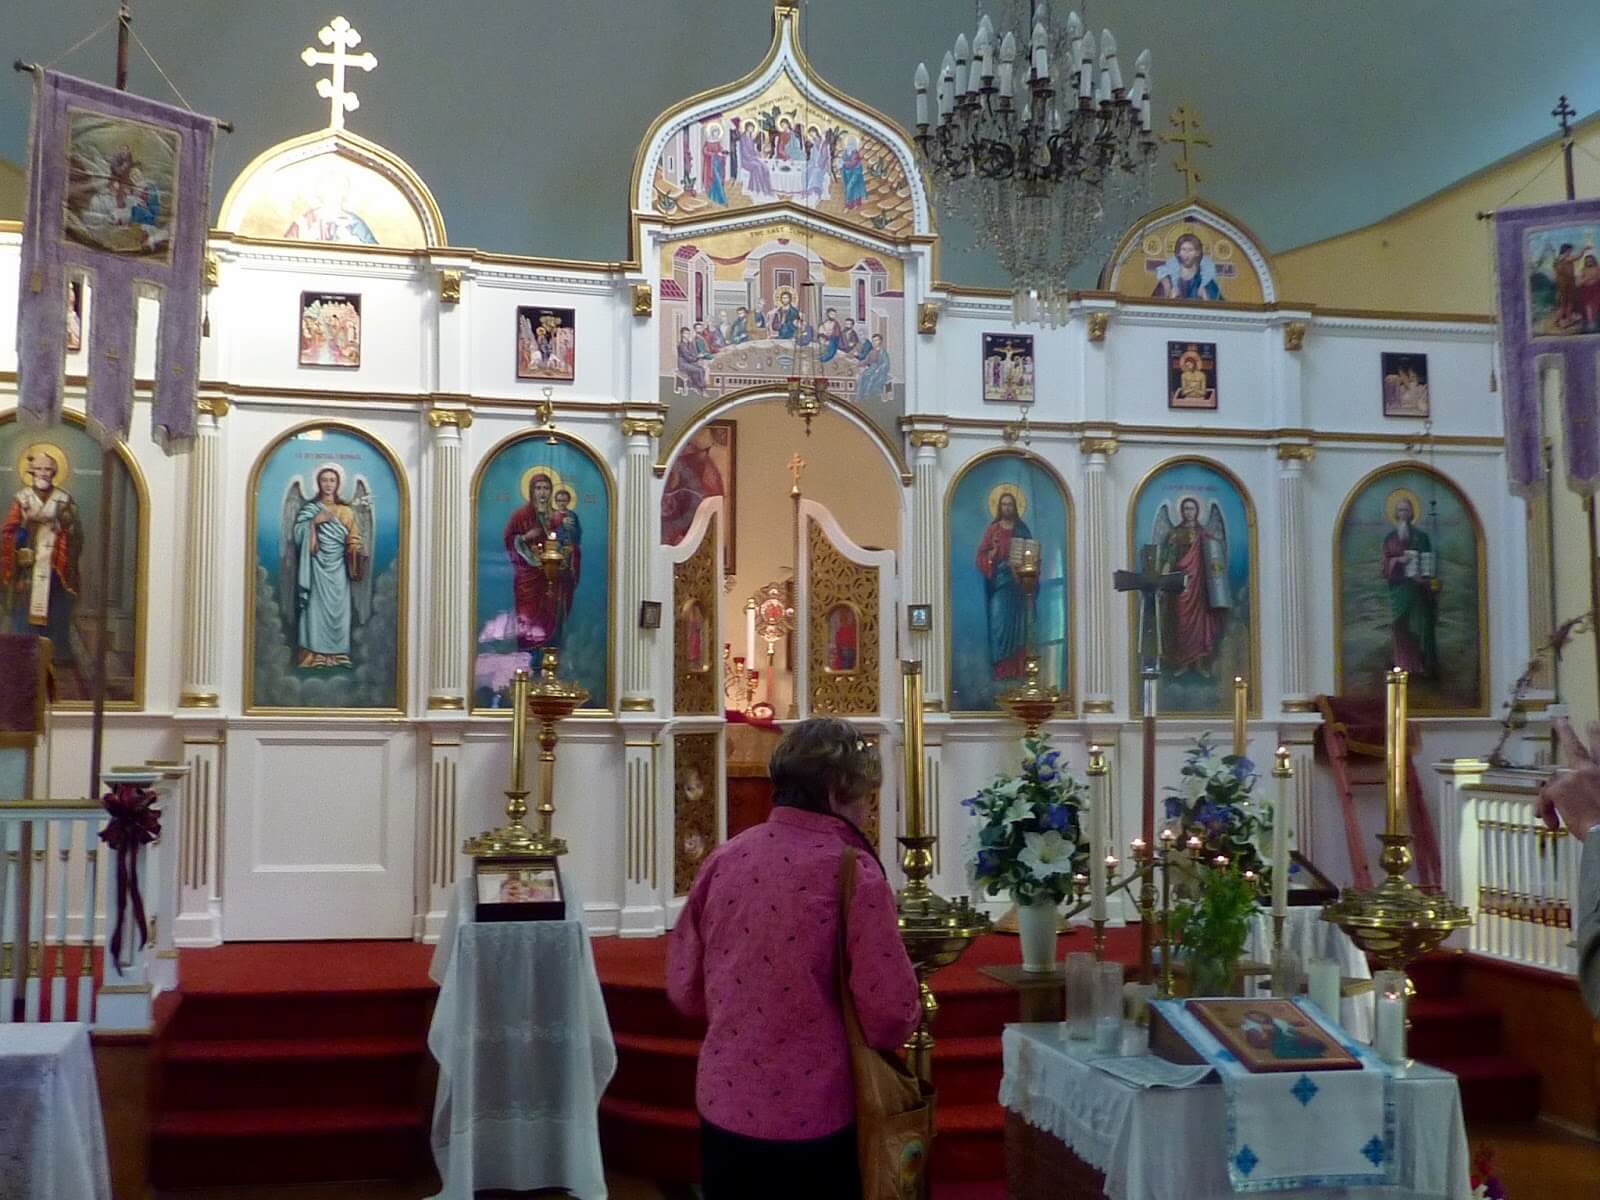 The altar of a Romanian Orthodox church.